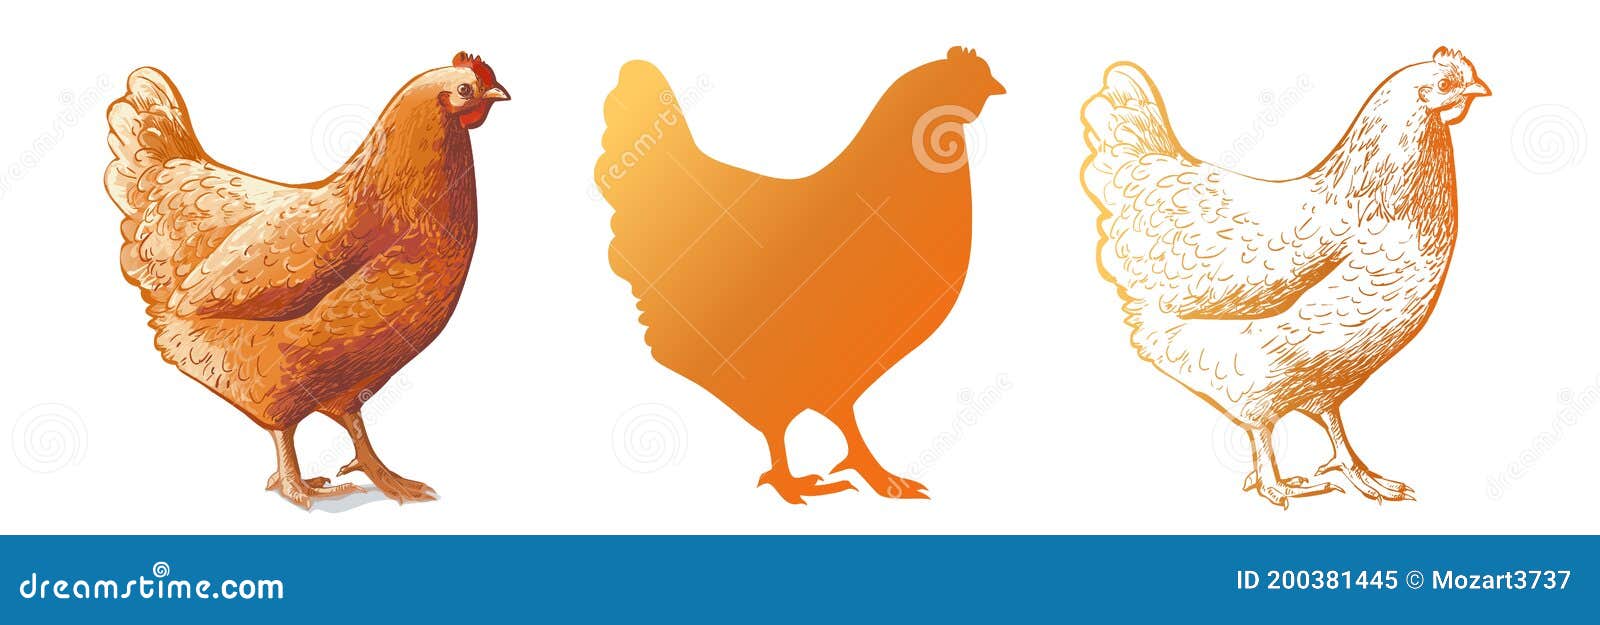 Chicken, Hen Bird. Poultry, Broiler, Farm Animal Feeding. Vintage Easter  Card. Egg Packaging Design. Realistic Sketch Stock Vector - Illustration of  poultry, crest: 200381445